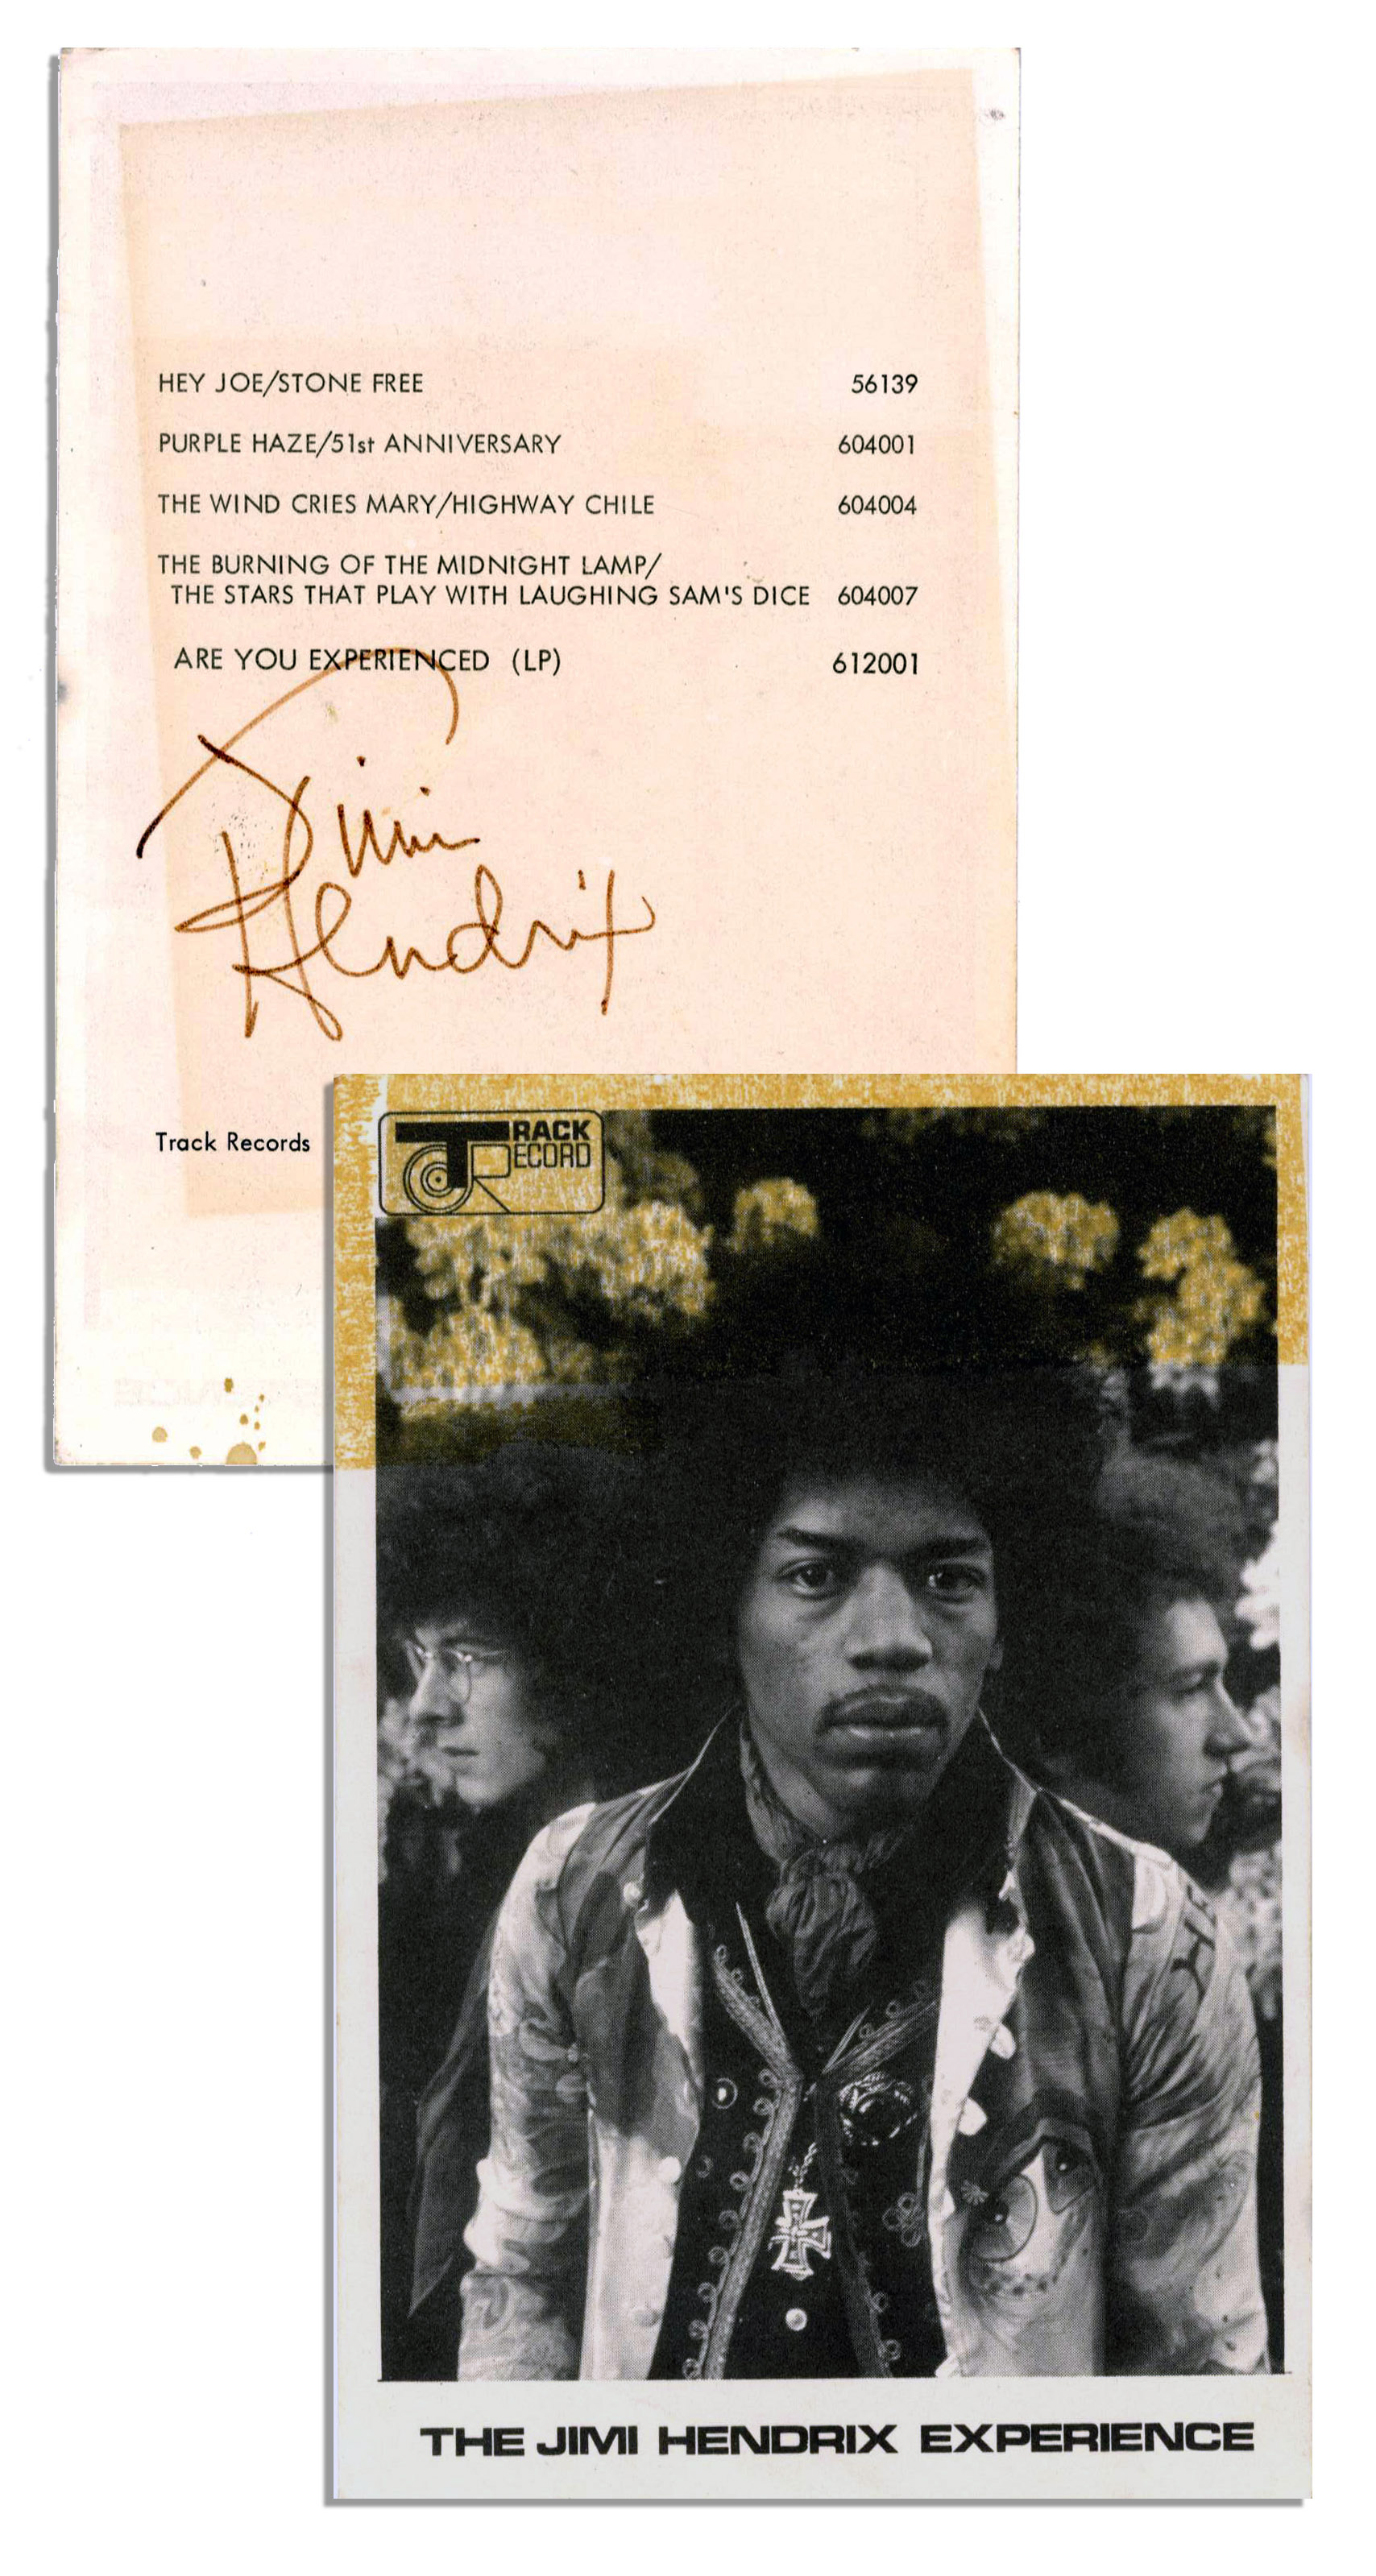 Jimi Hendrix concert poster